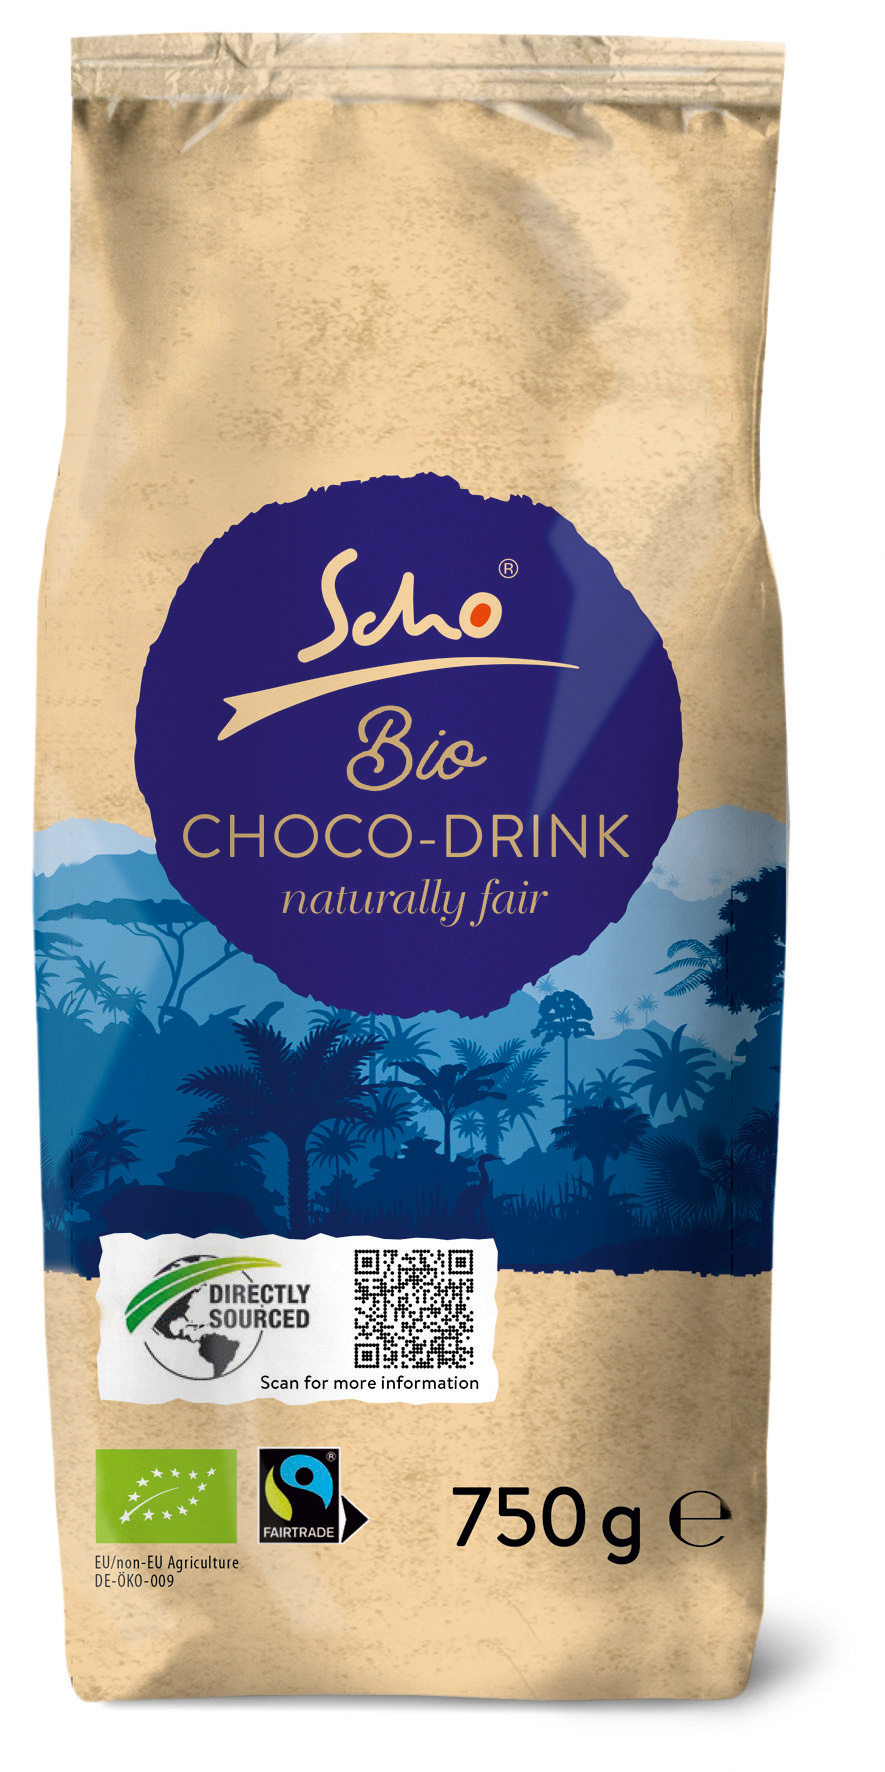 Scho Bio Choco-Drink naturally fair